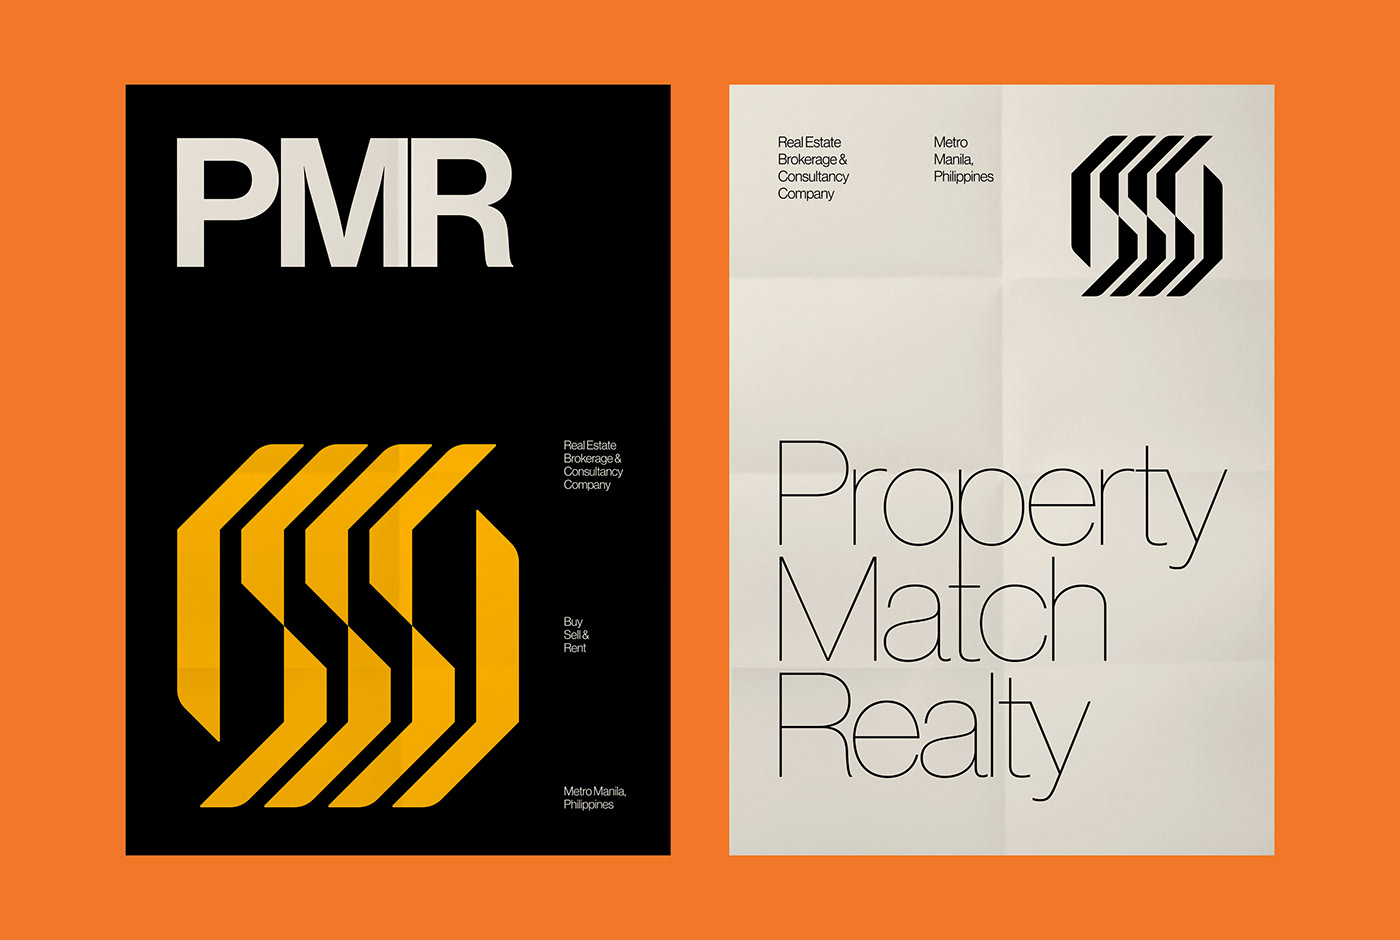 grid logo Manila mark minimalist modernist philippines poster real estate swiss